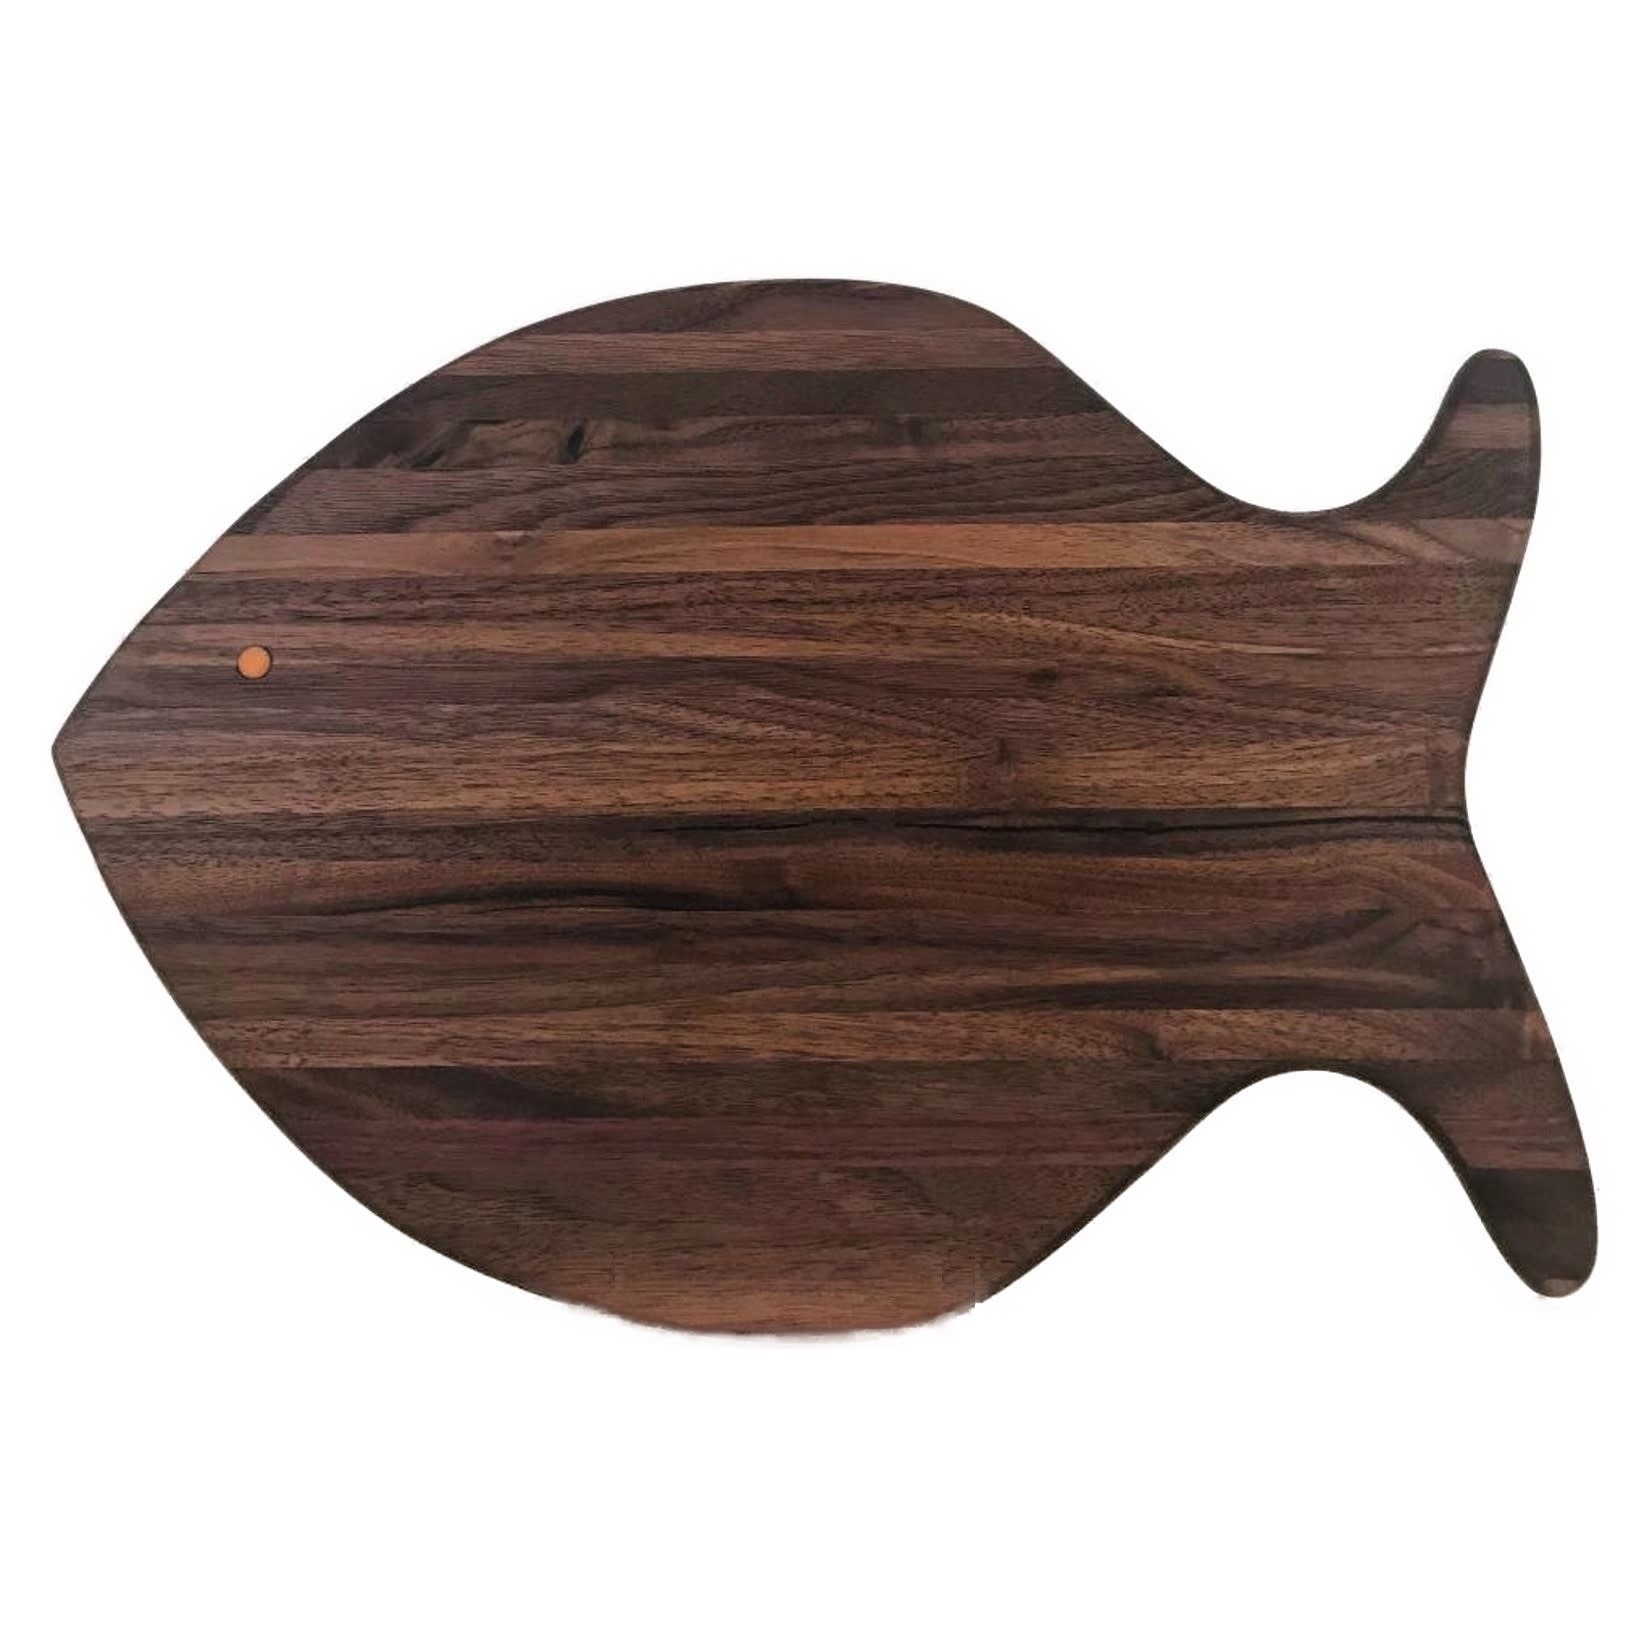 Richard Rose Culinary Fish shaped Cutting Board